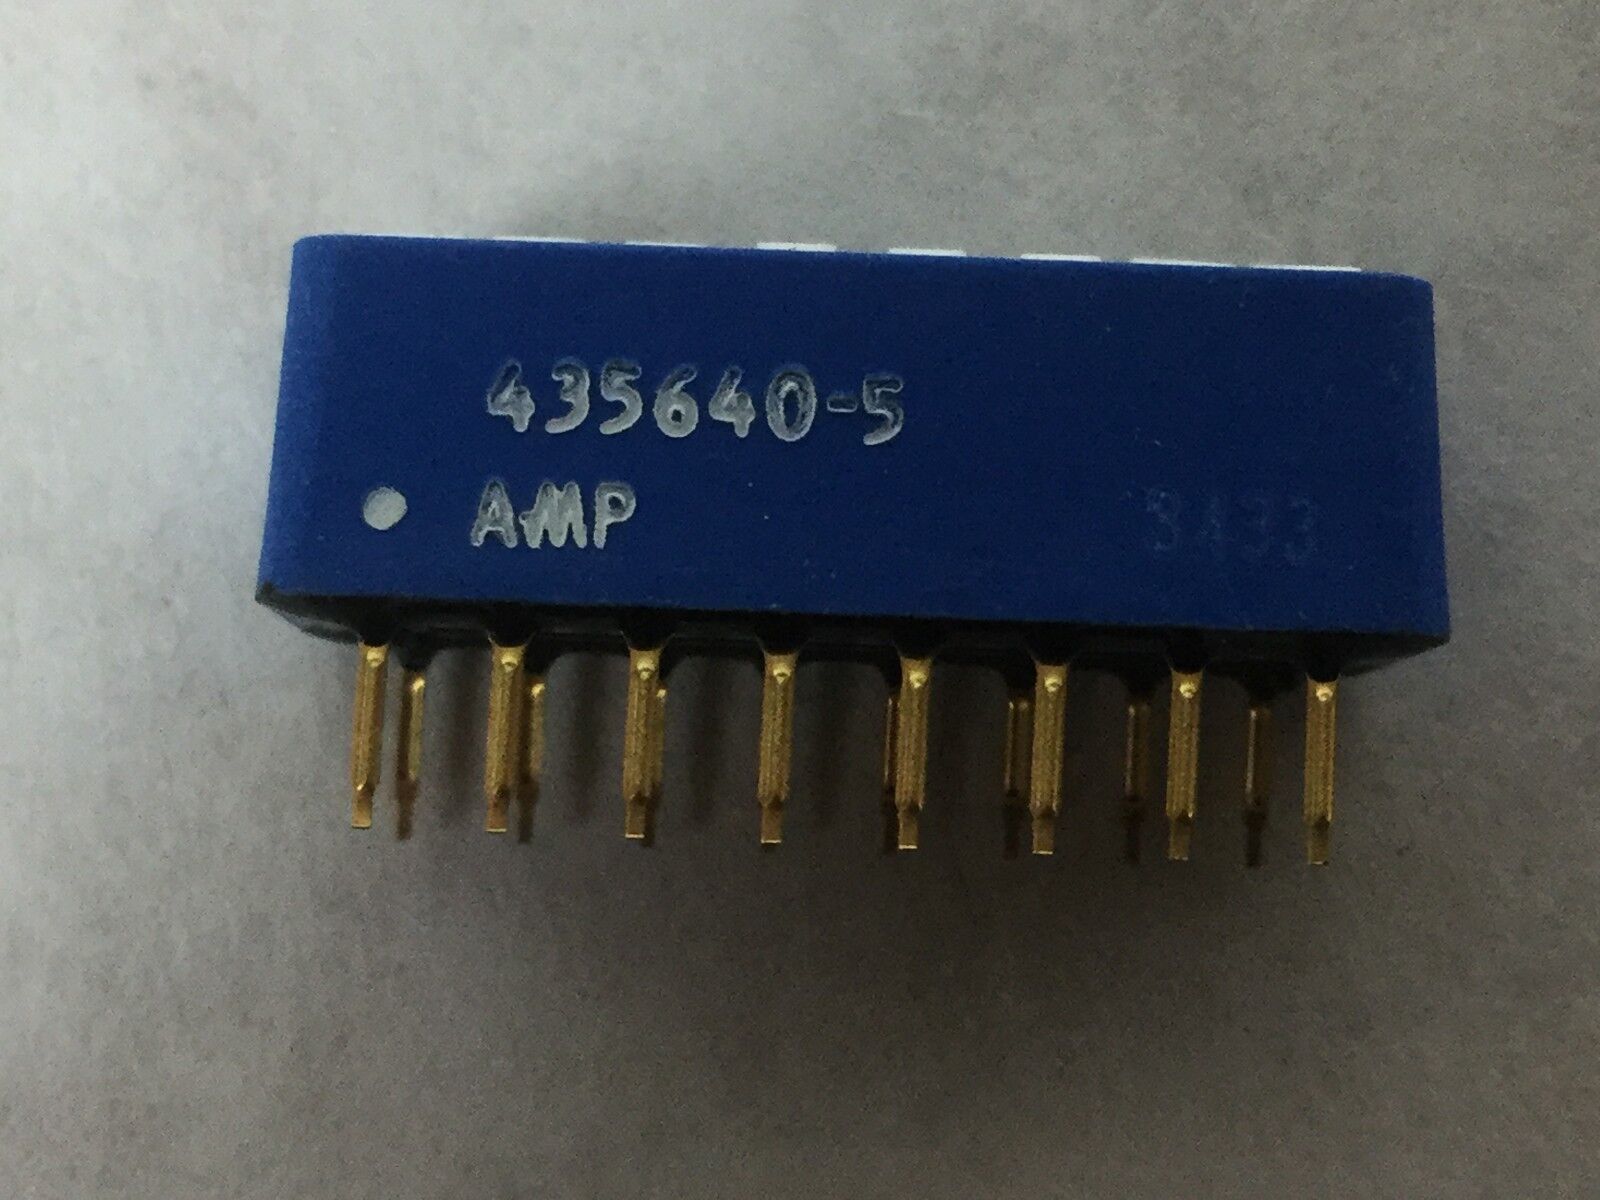 AMP 435640-5 Rocker Switch, NEW